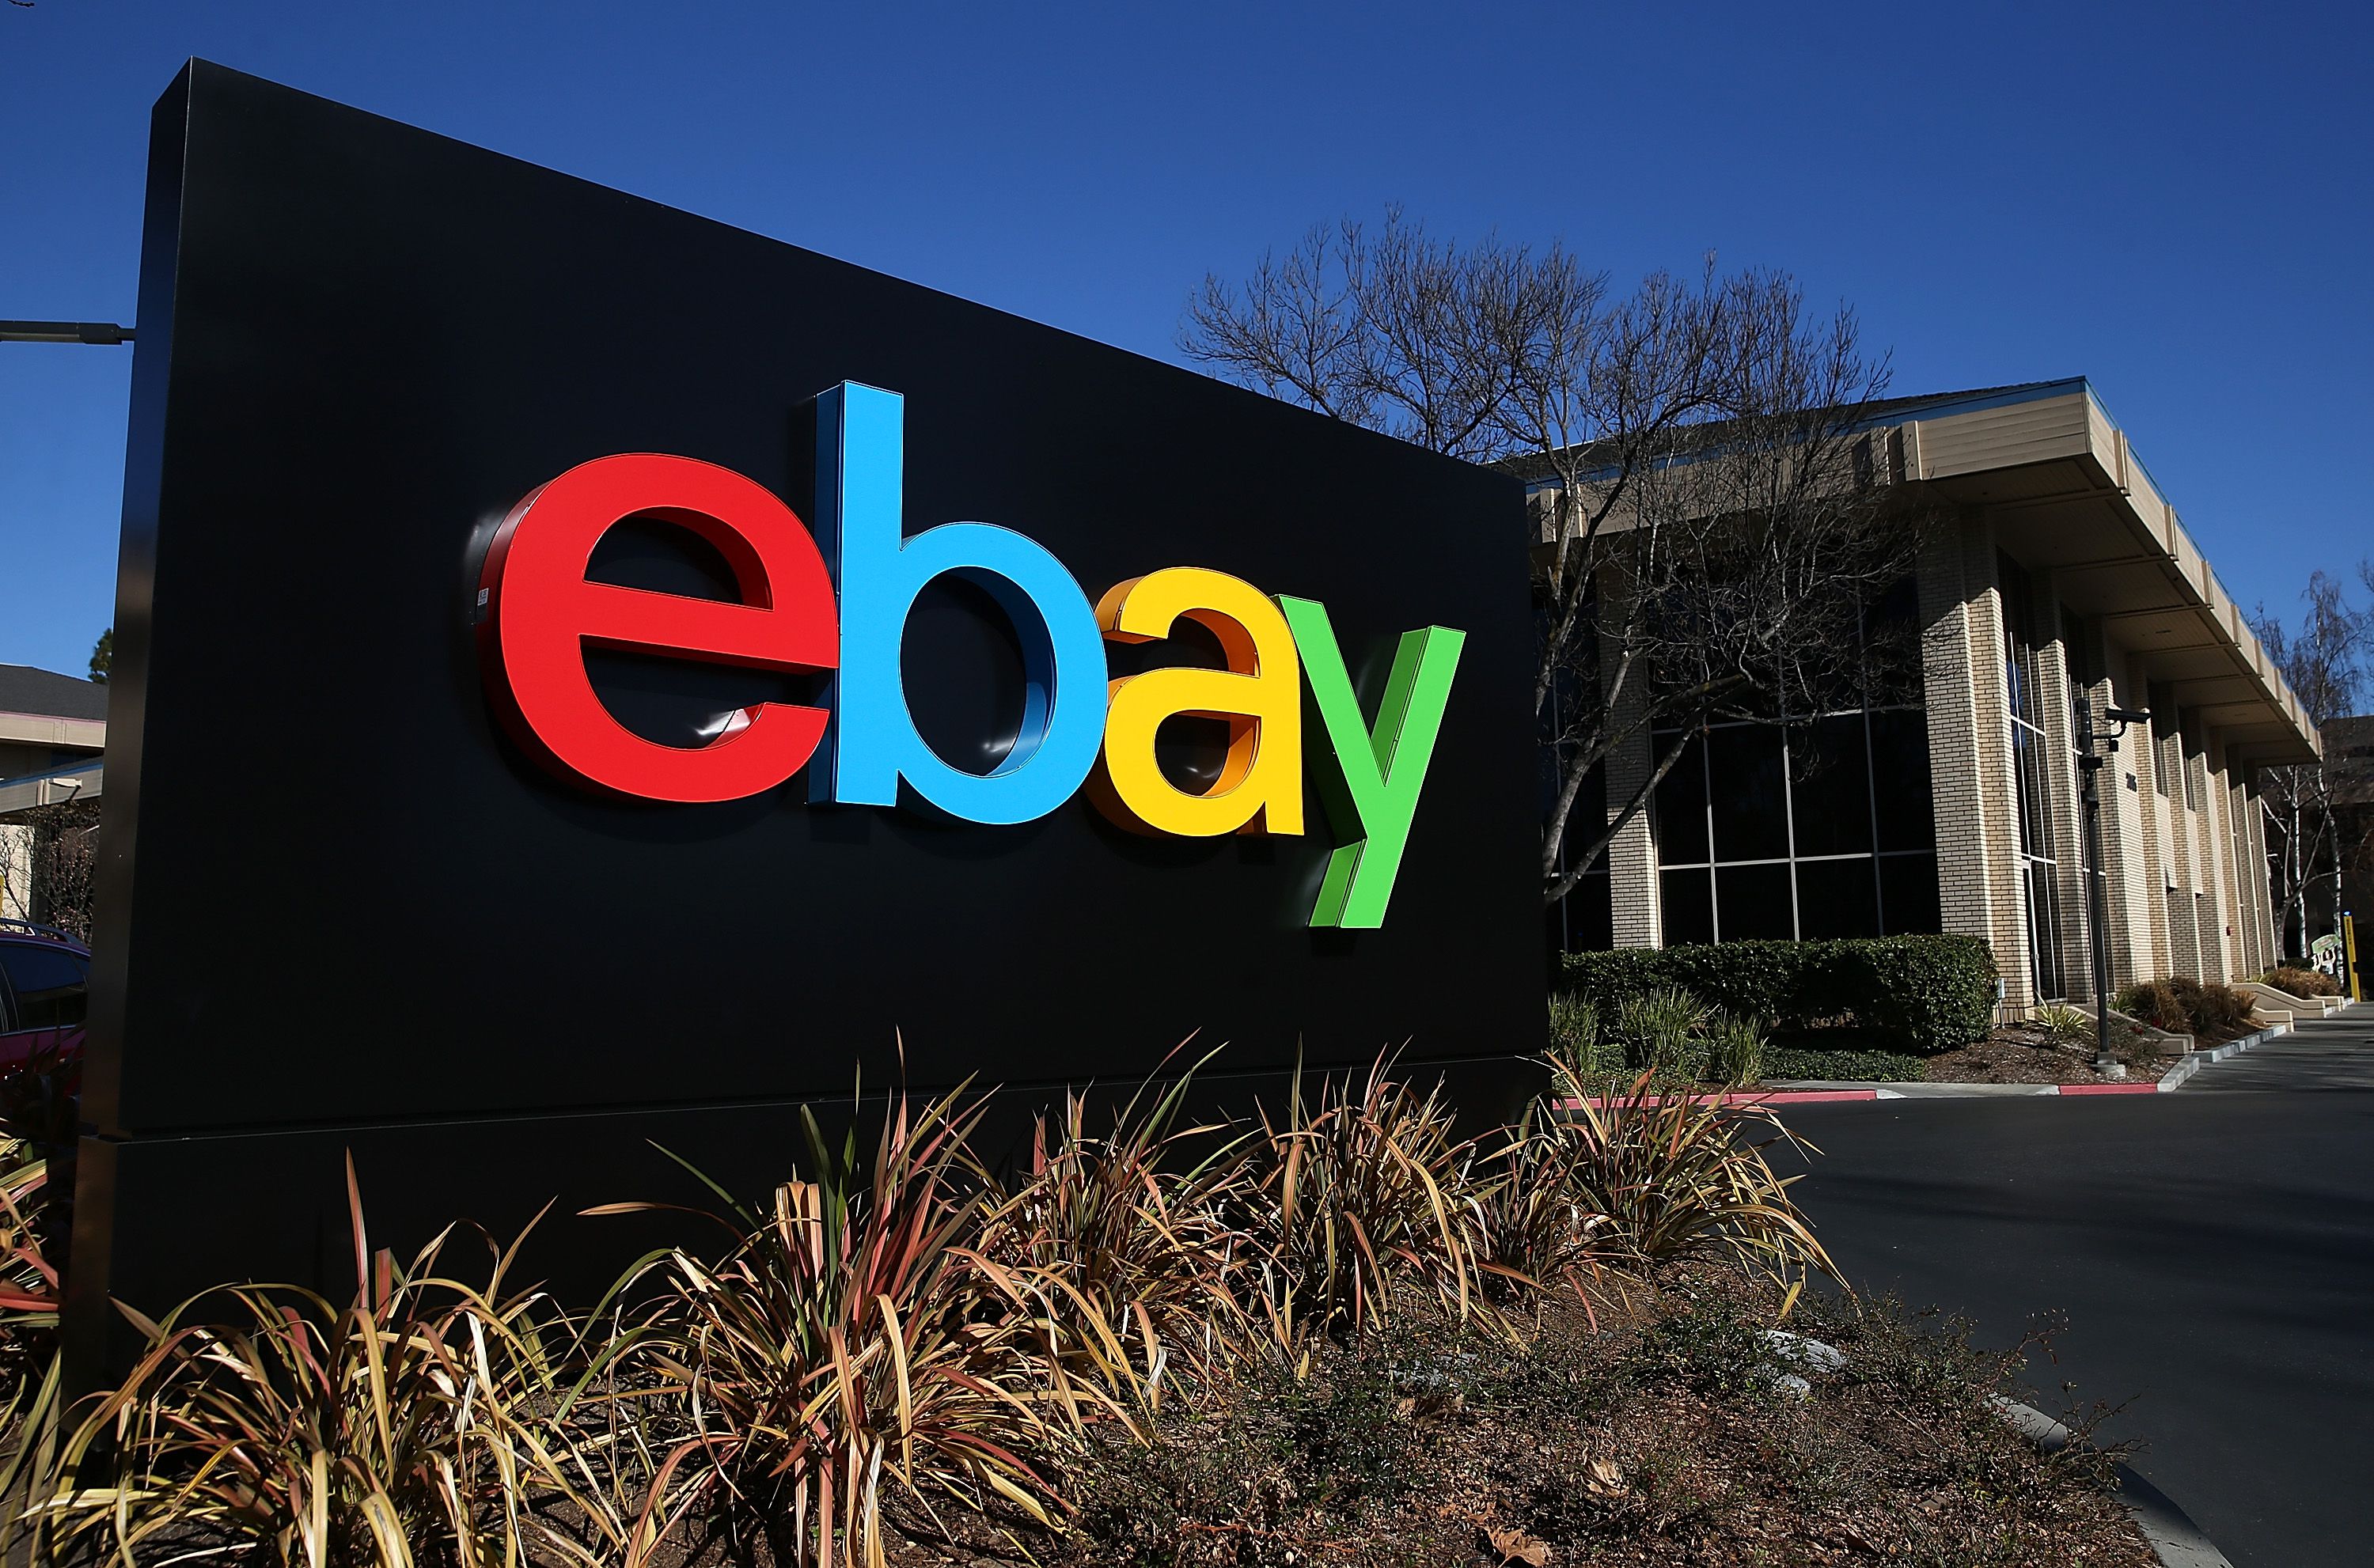 Ebay Reports Quarterly Earnings